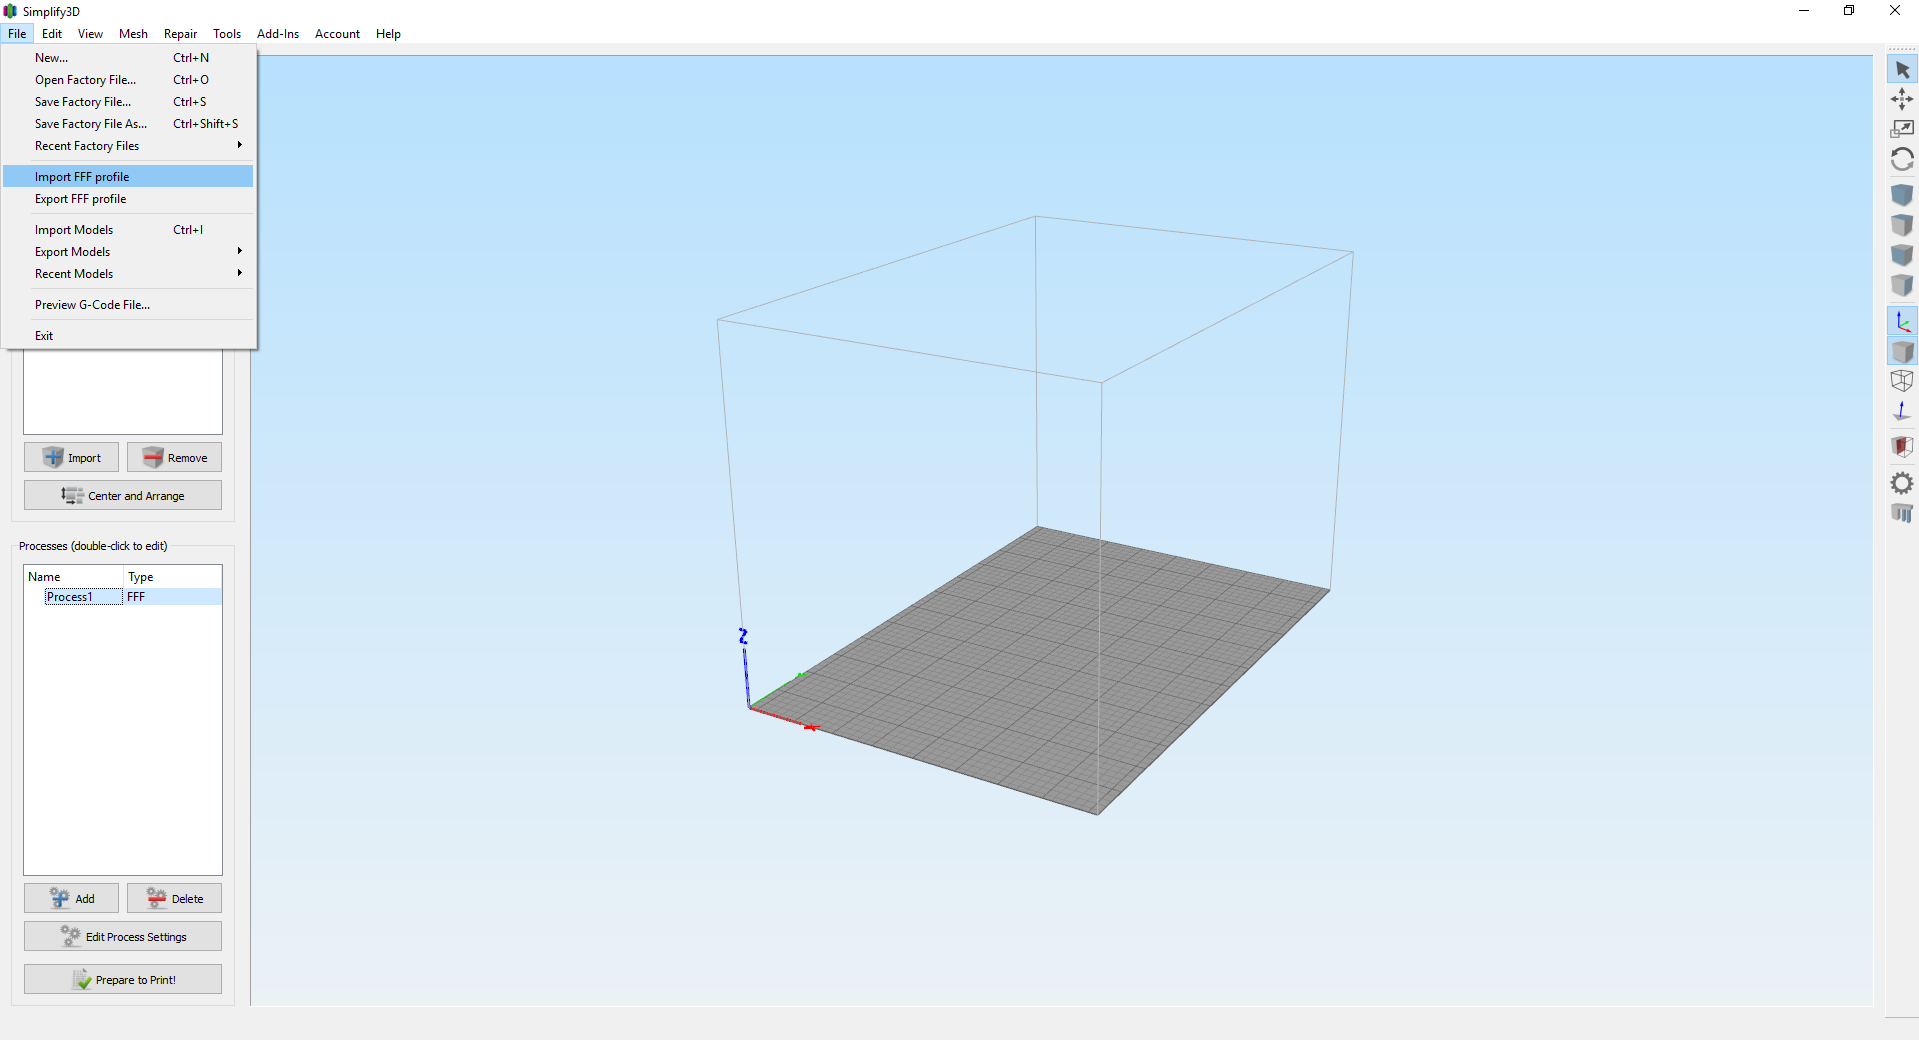 how to flip a model in simplify 3d